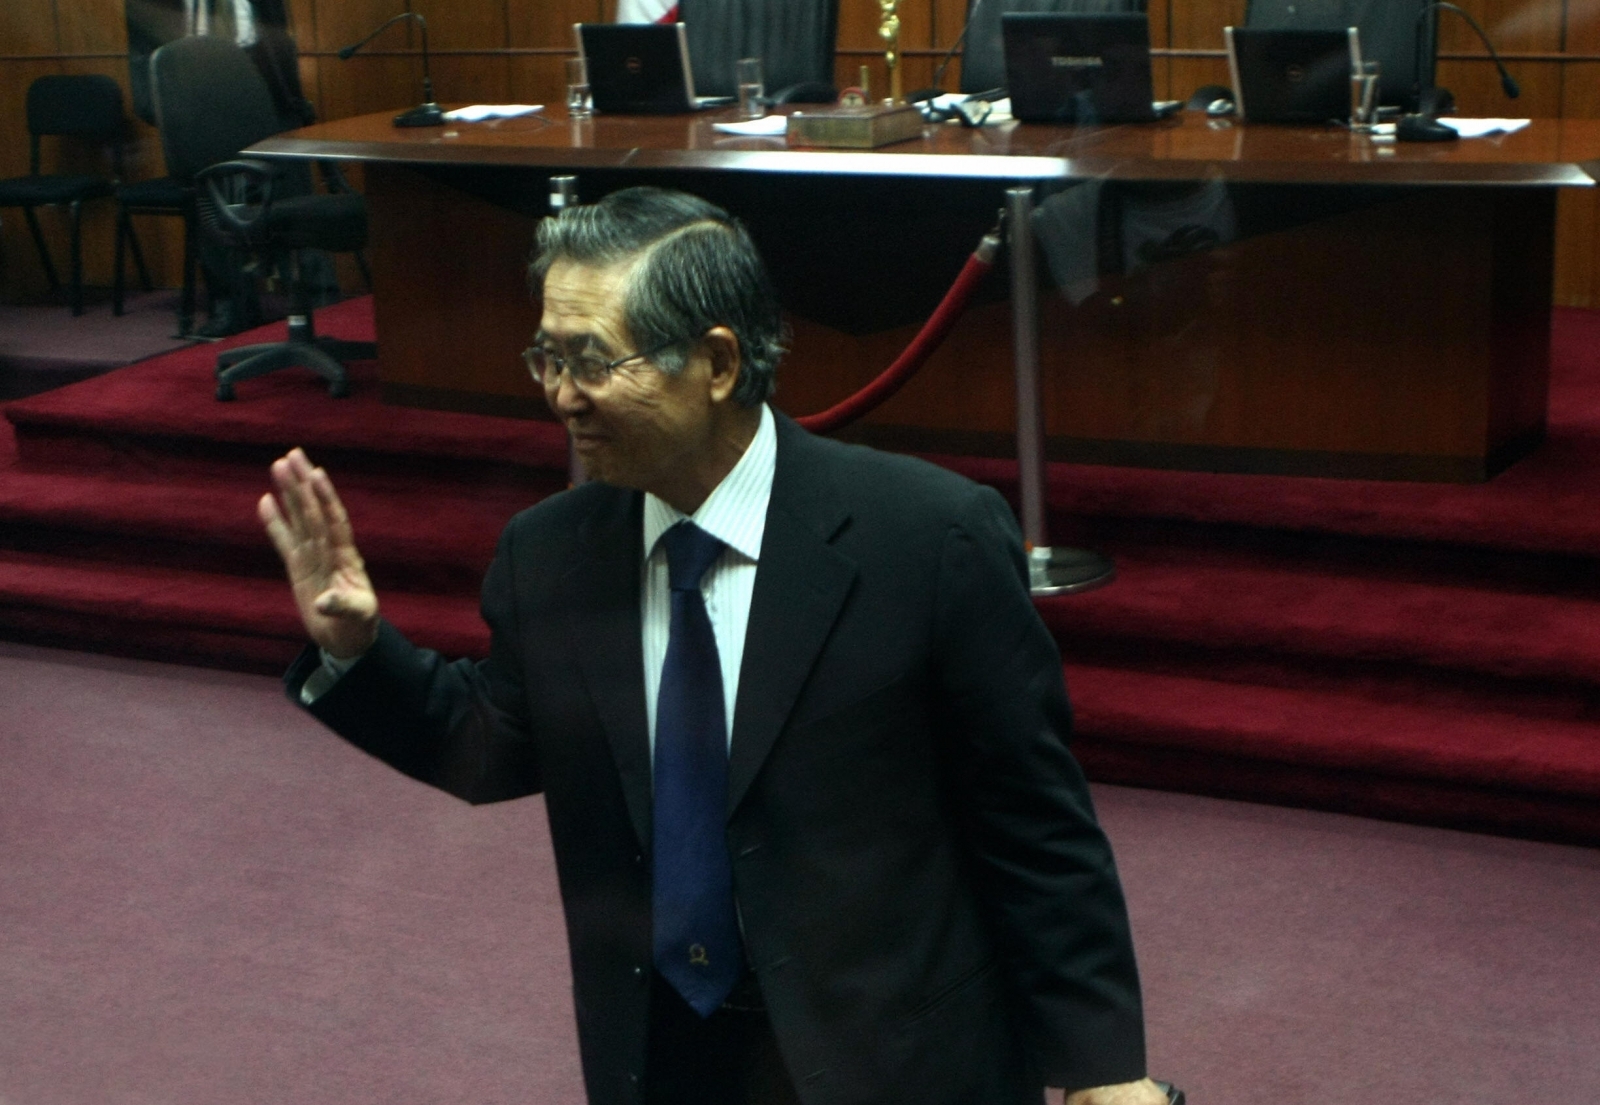 Peru Fujimori